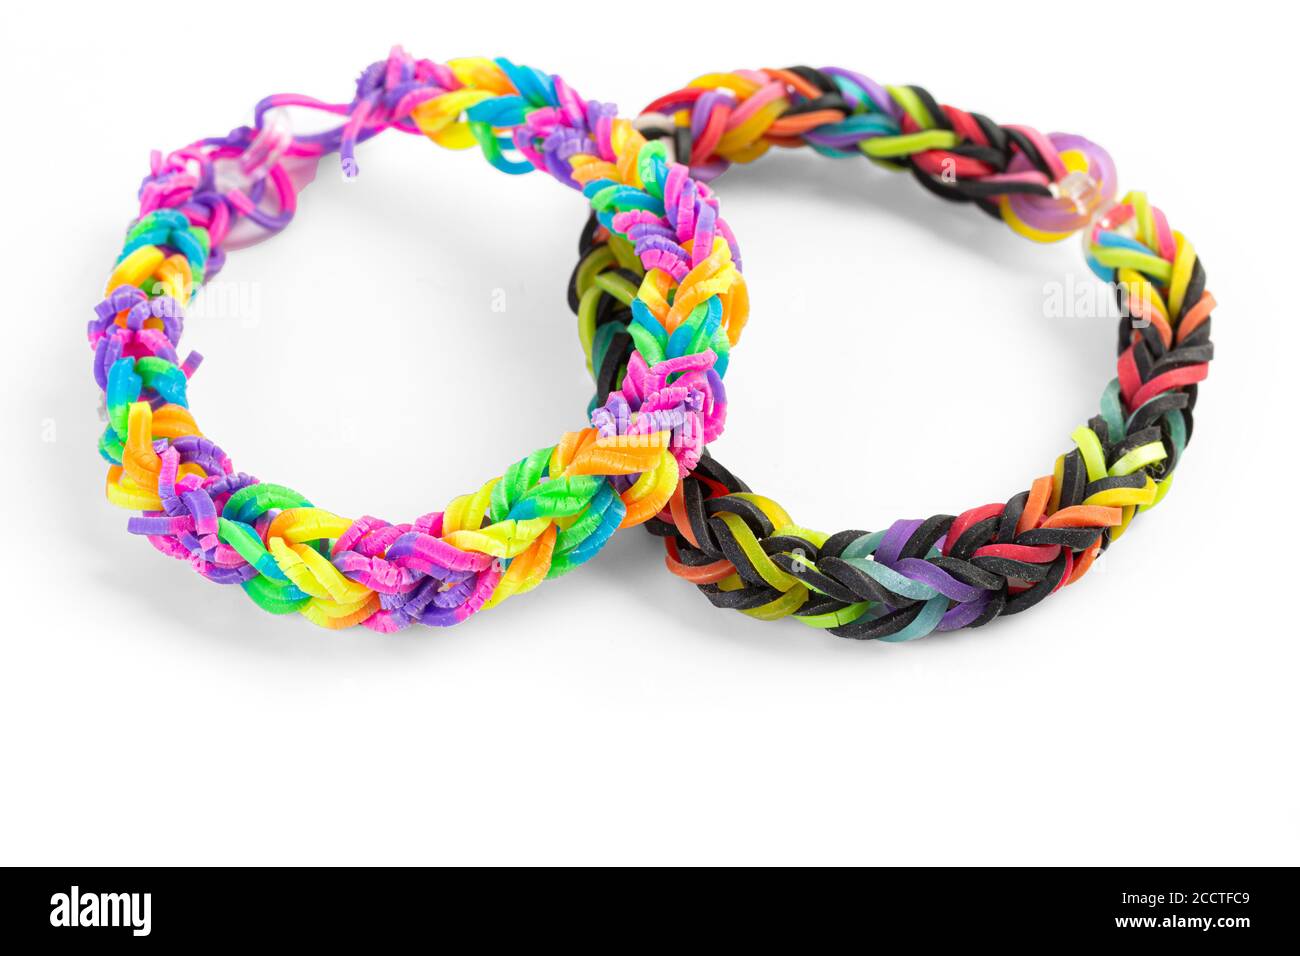 Discover 74+ tiny rubber band bracelets super hot